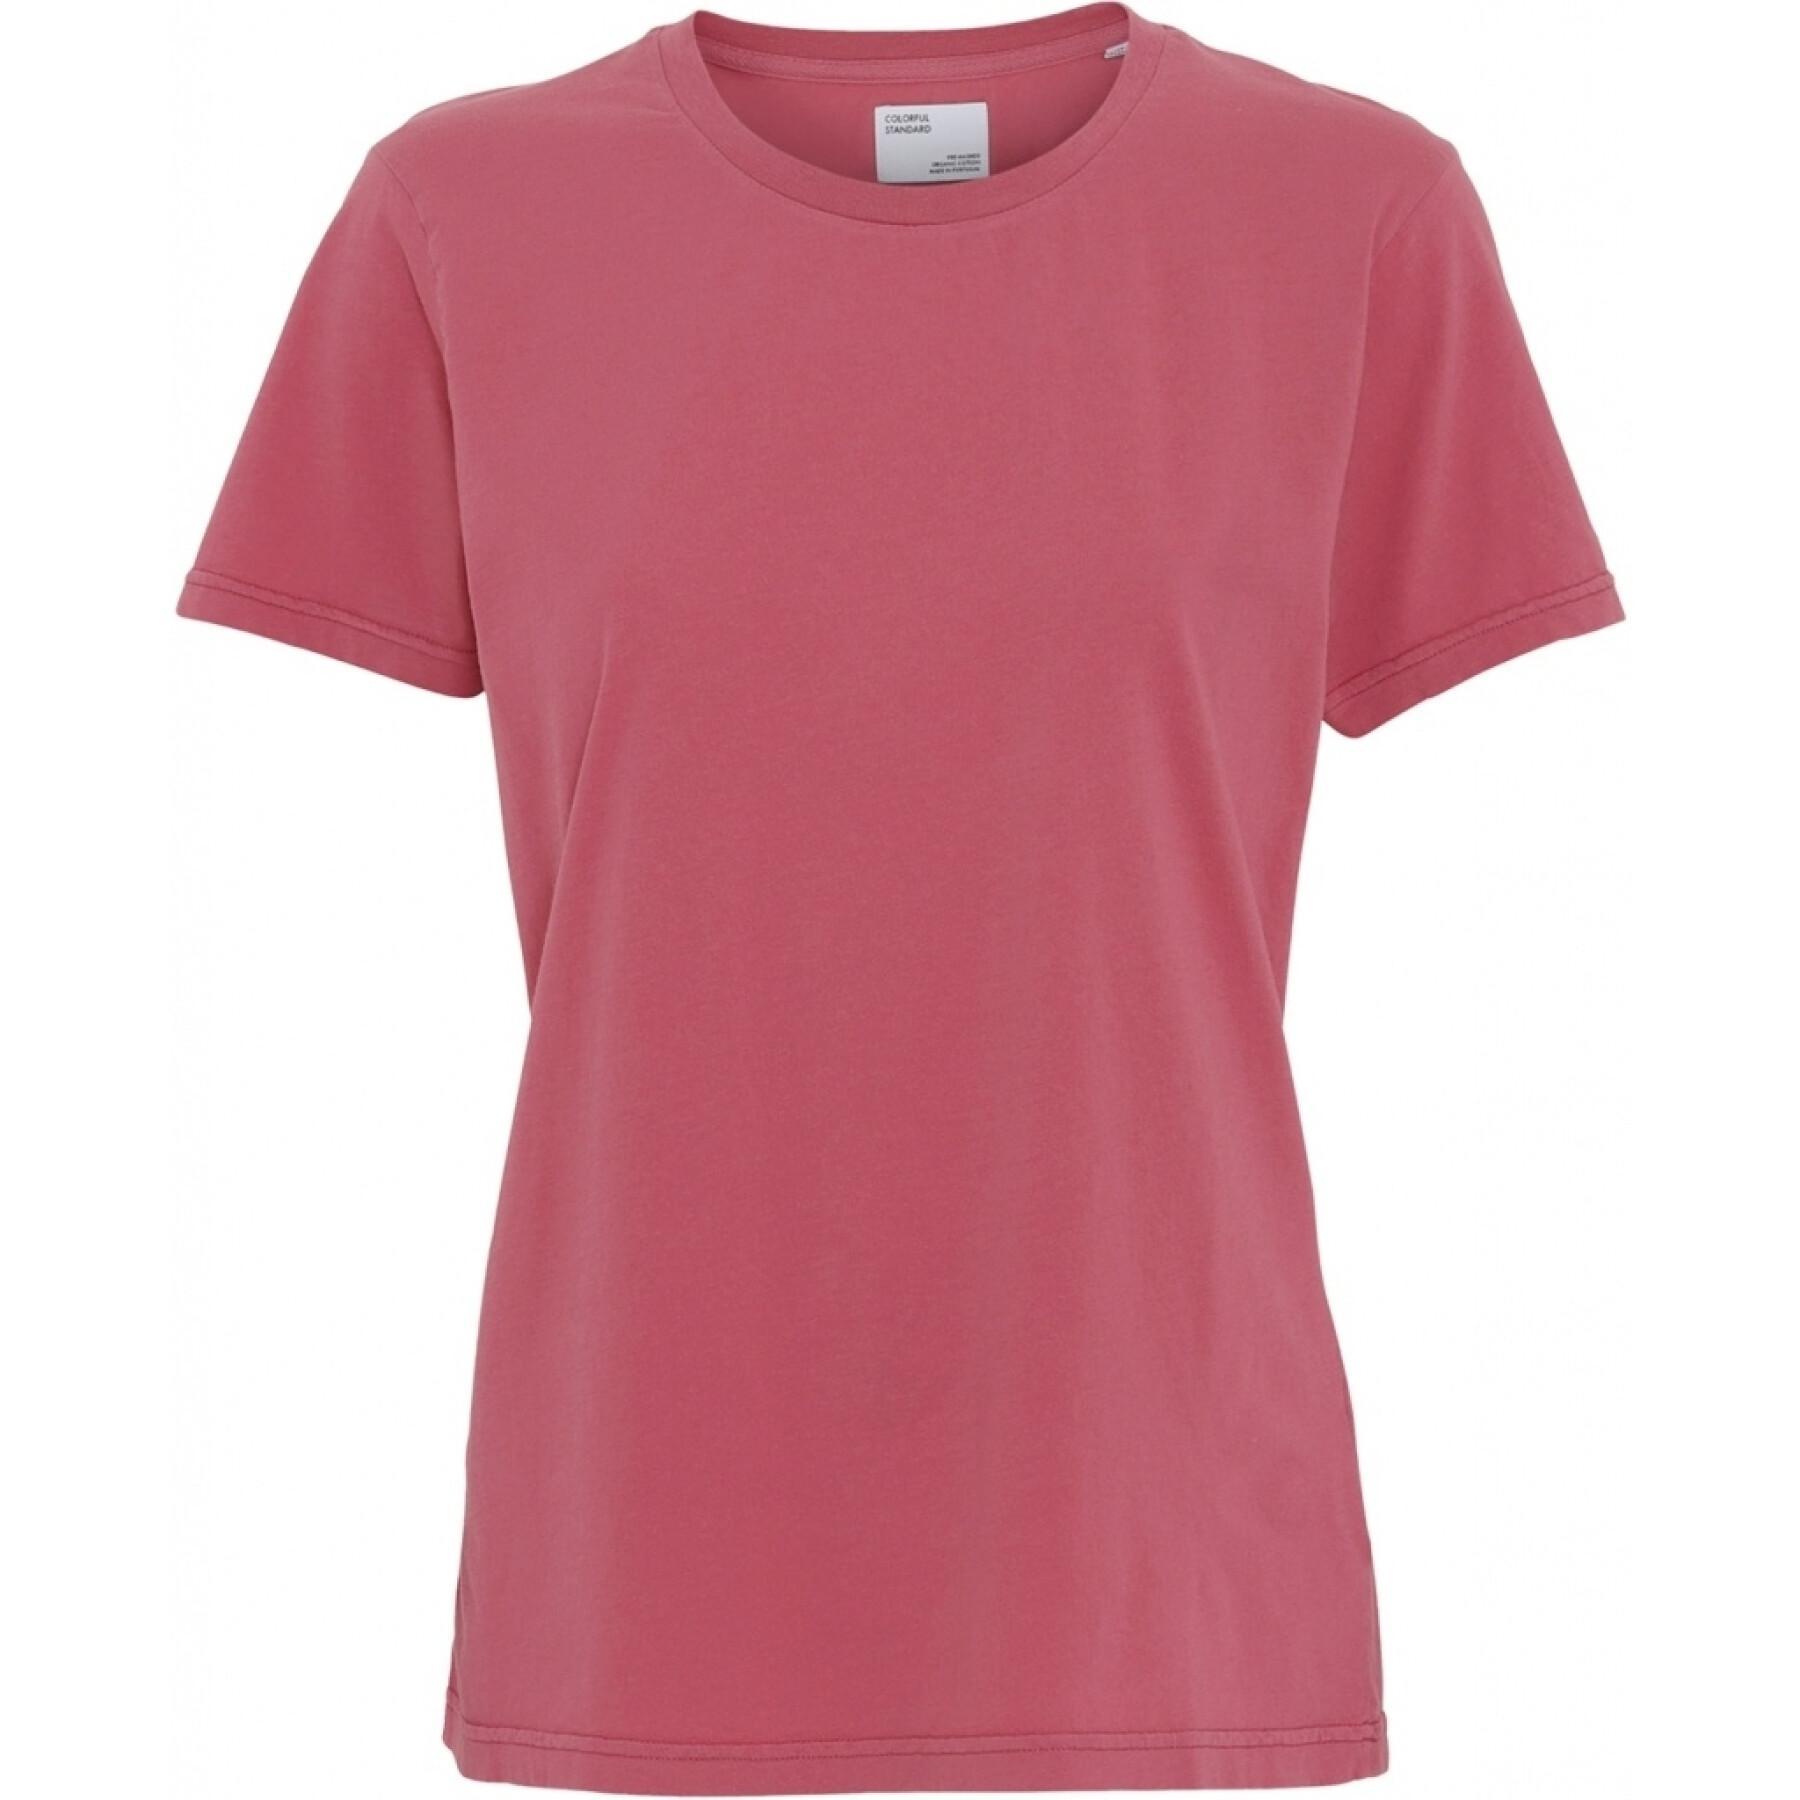 Camiseta de mujer Colorful Standard Light Organic raspberry pink